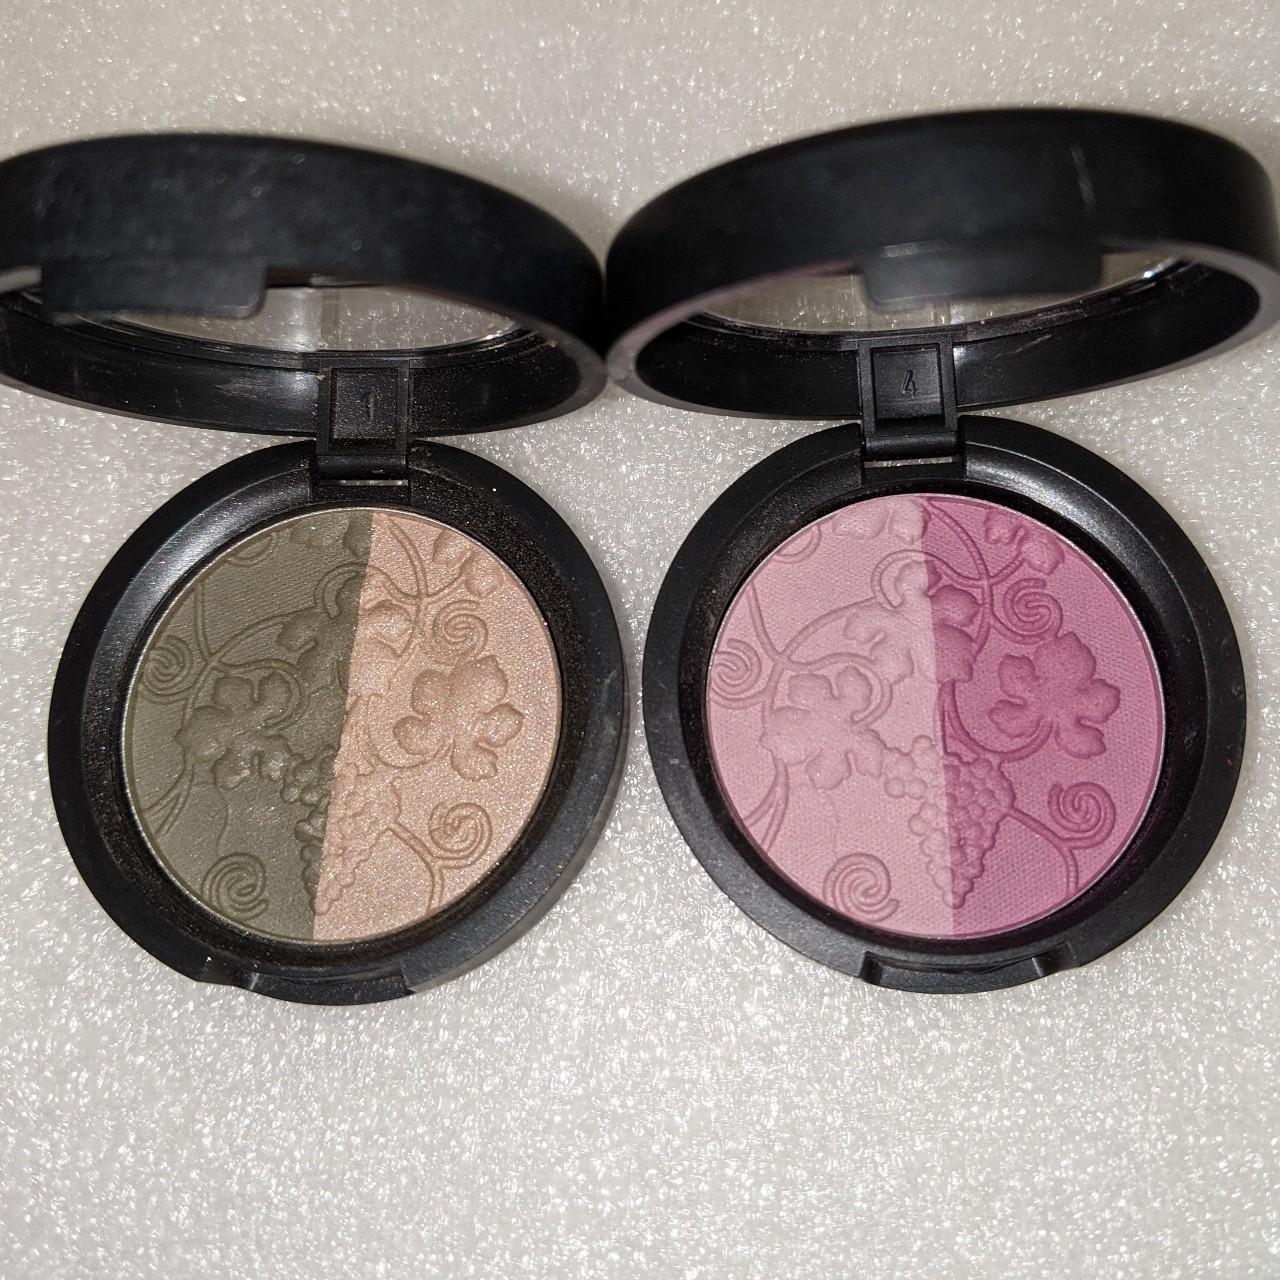 Product Image 1 - New, Baked Impressions eyeshadow duo